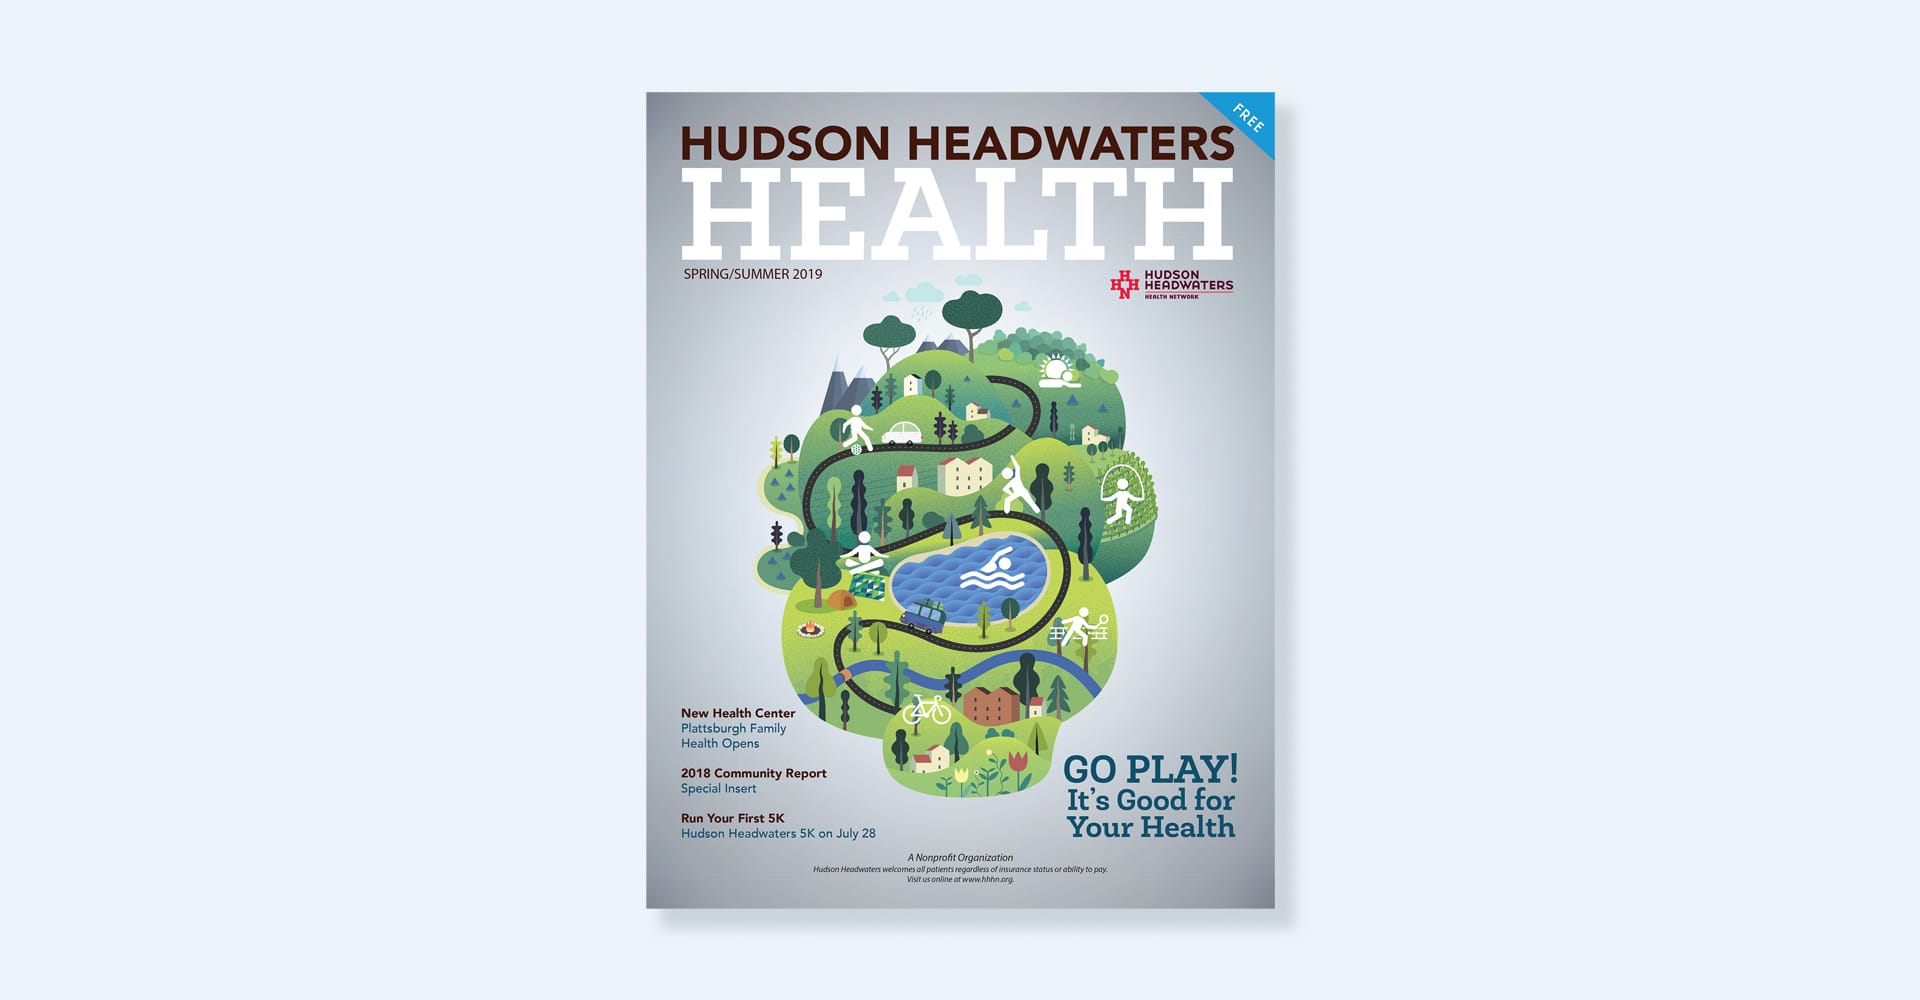 Spring/Summer 2019 Hudson Headwater Health Magazine cover